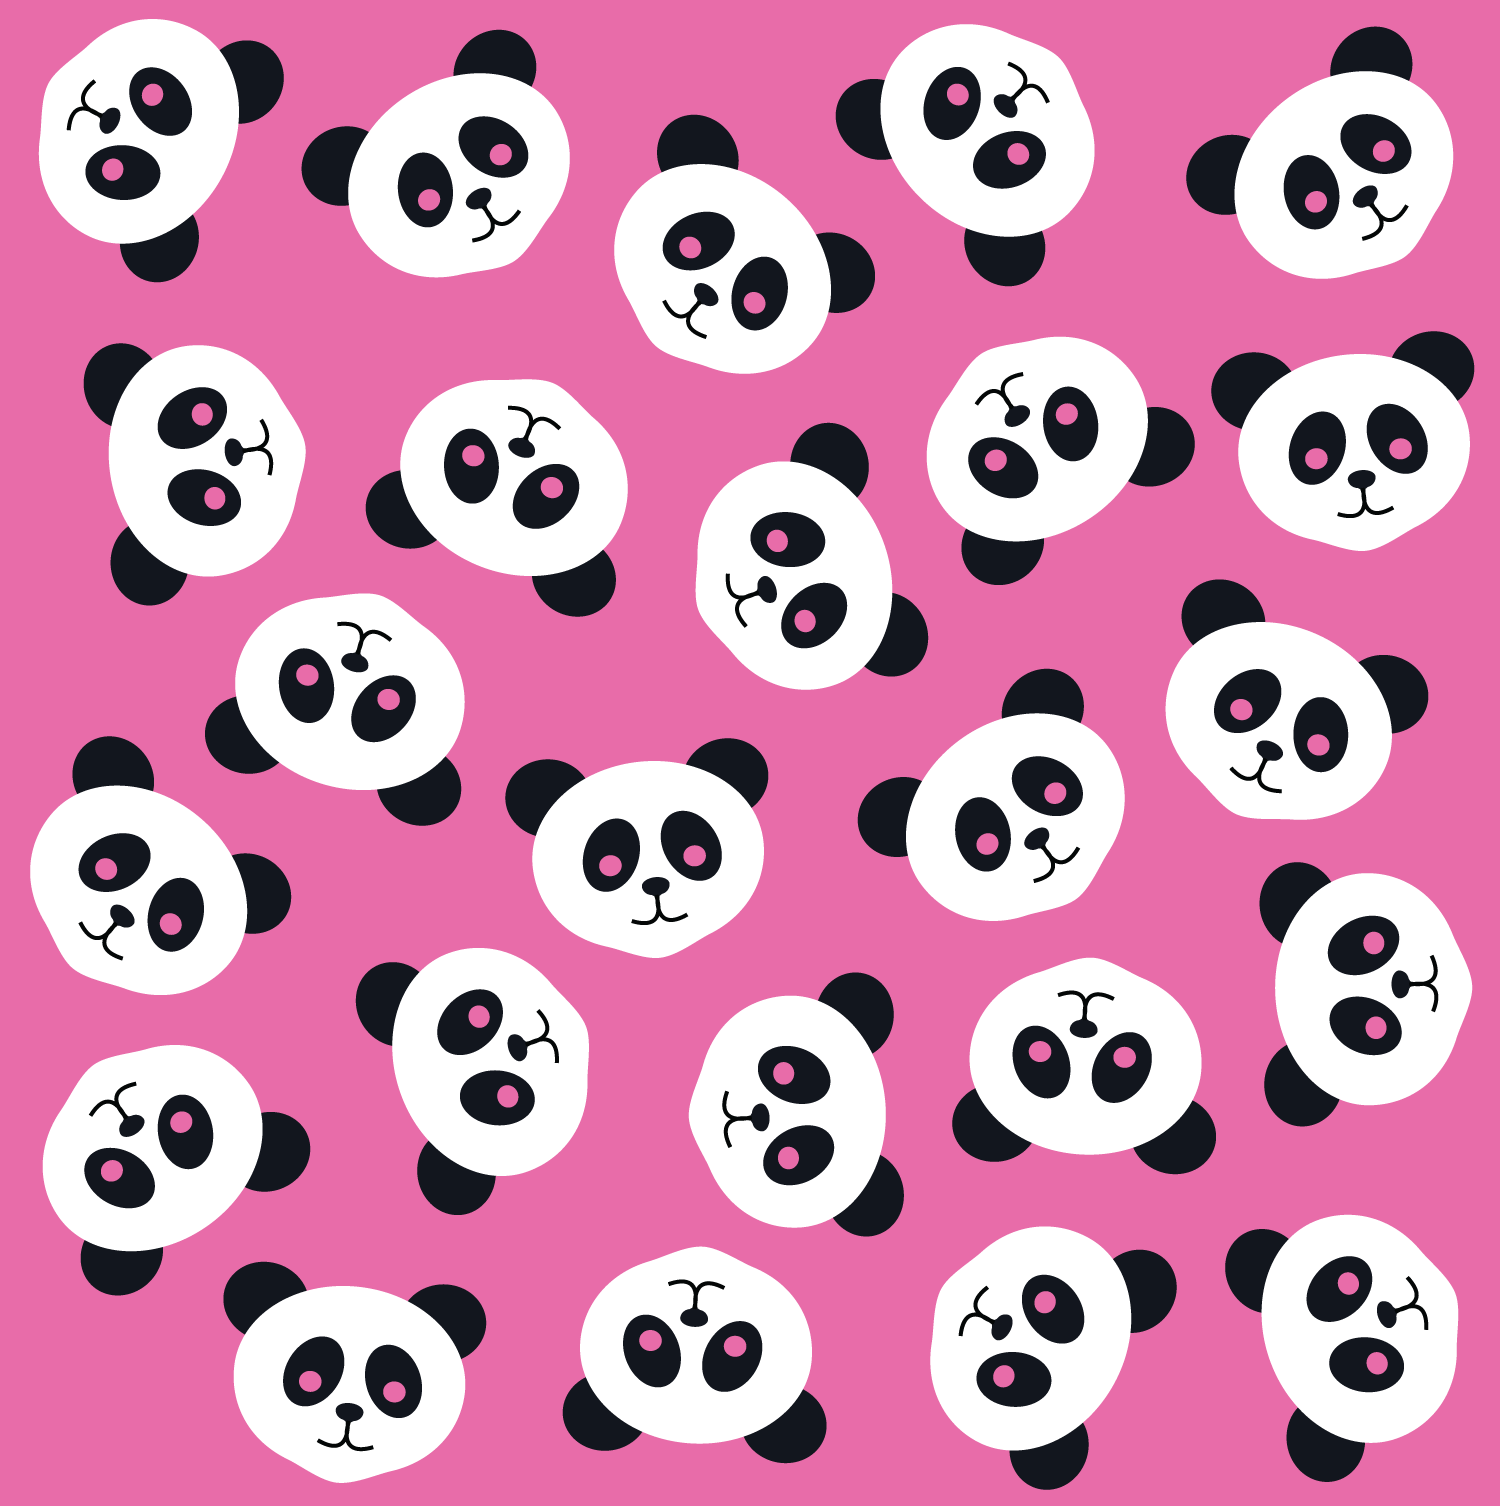 Free download Pink panda toss pattern [1500x1506] for your Desktop, Mobile & Tablet. Explore Pink Panda Wallpaper. Panda Bear Wallpaper, HD Panda Wallpaper, Cute Wallpaper of Pandas